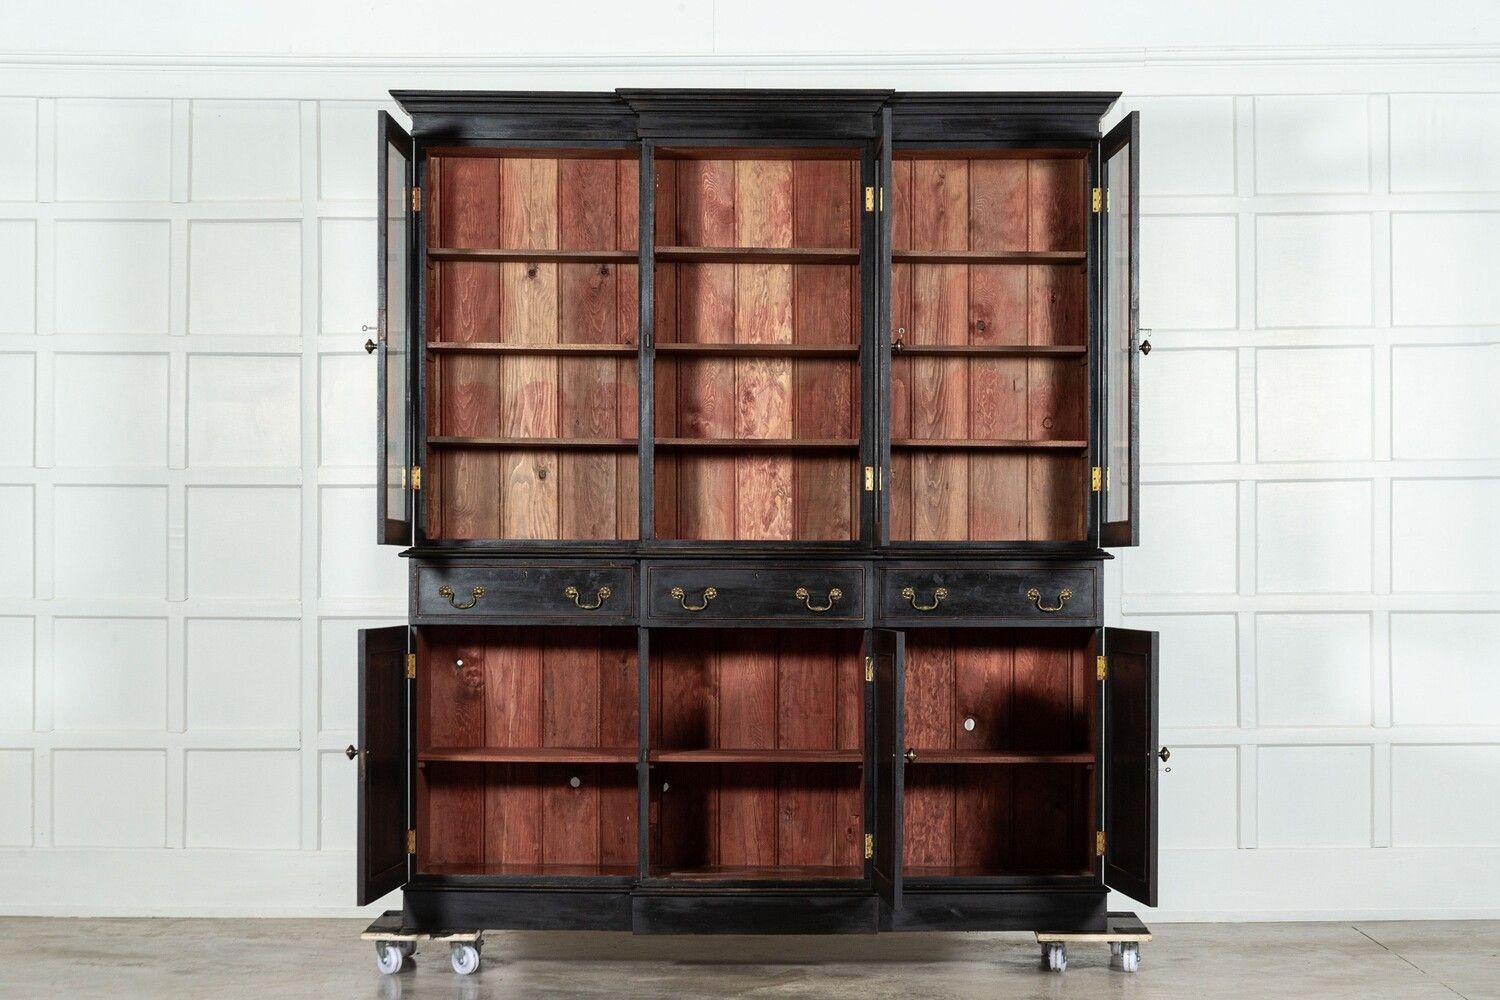 circa 1940
Large English Ebonised Mahogany Glazed Breakfront Bookcase
sku 1040
Base W189 x D41 x H102 cm
Top W197 x D34 x H122 cm
Together W197 x D41 x H224 cm
Weight 166 Kg